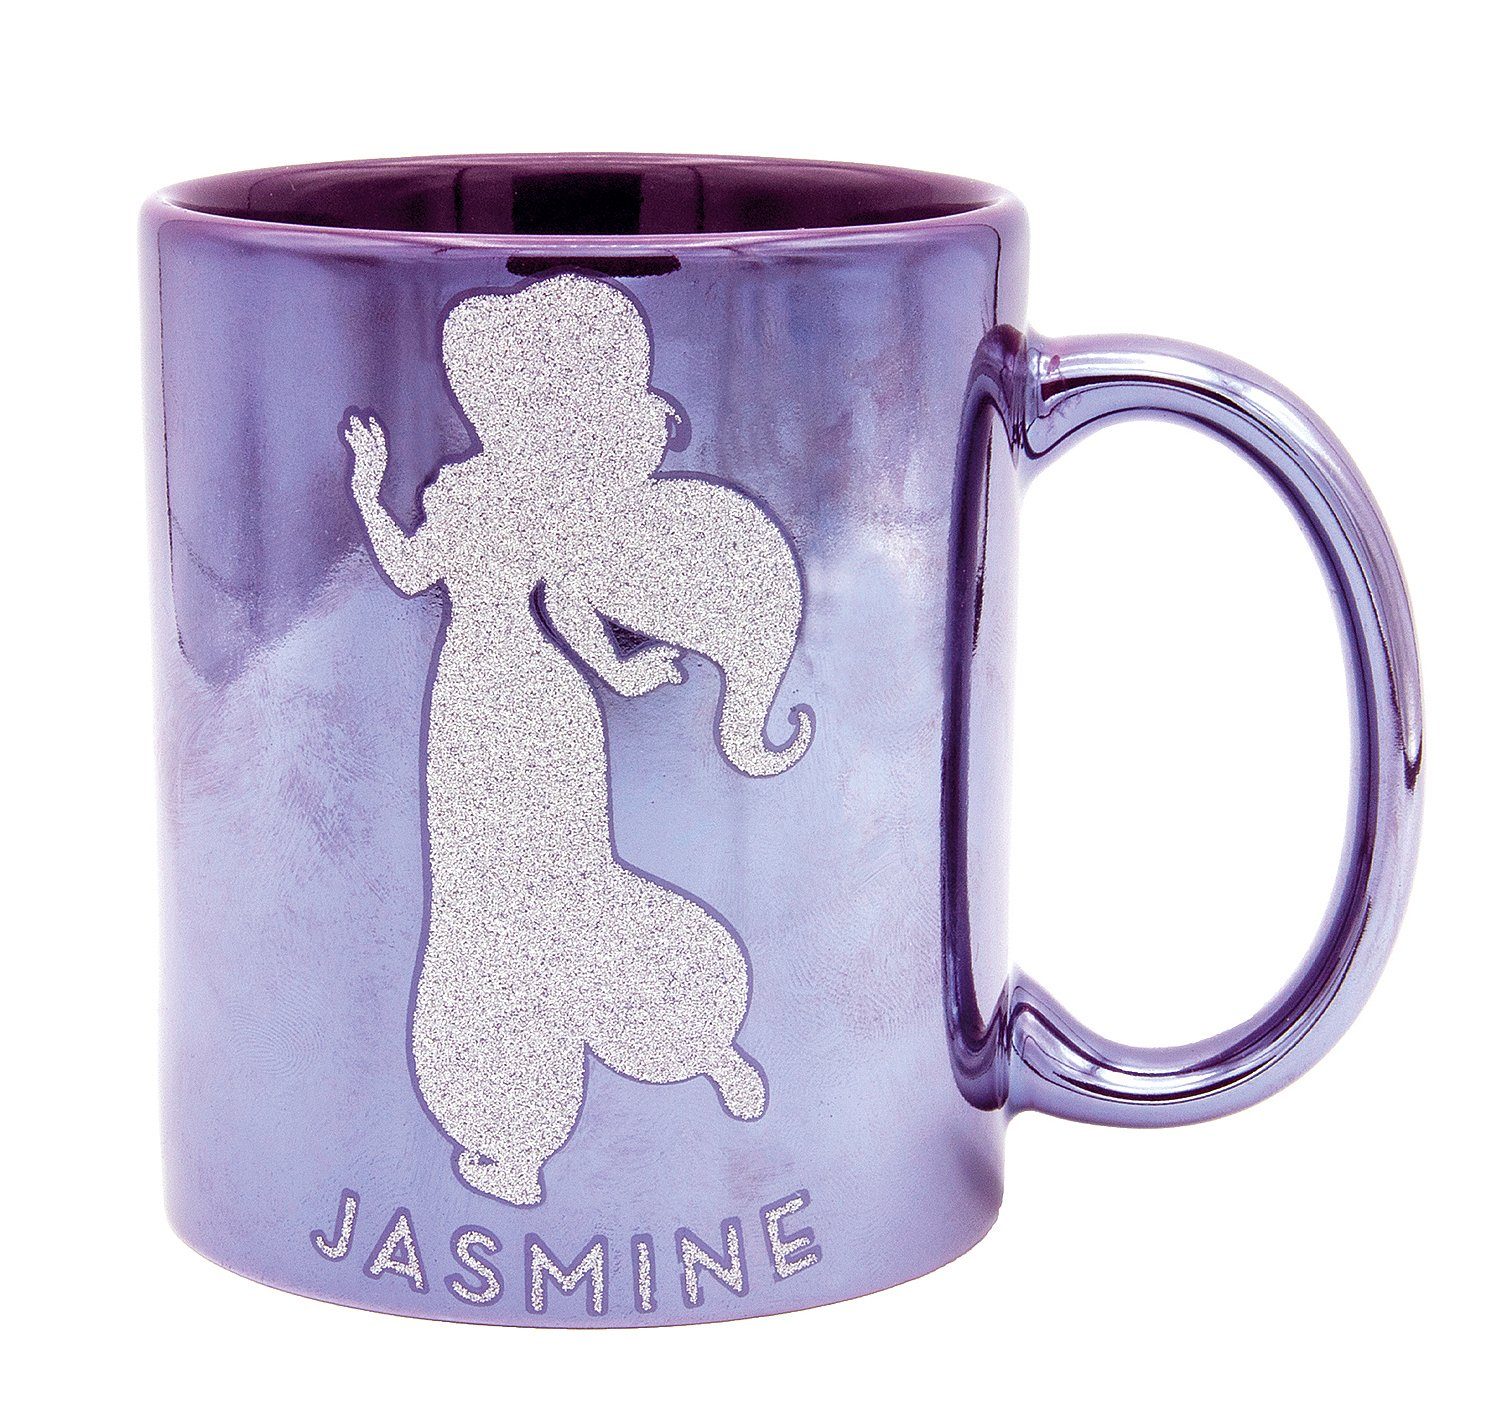 OWN Jasmine Metallic Princess Toy MY Tasse Tasse Metall MAKING Disney CHOICES, Joy